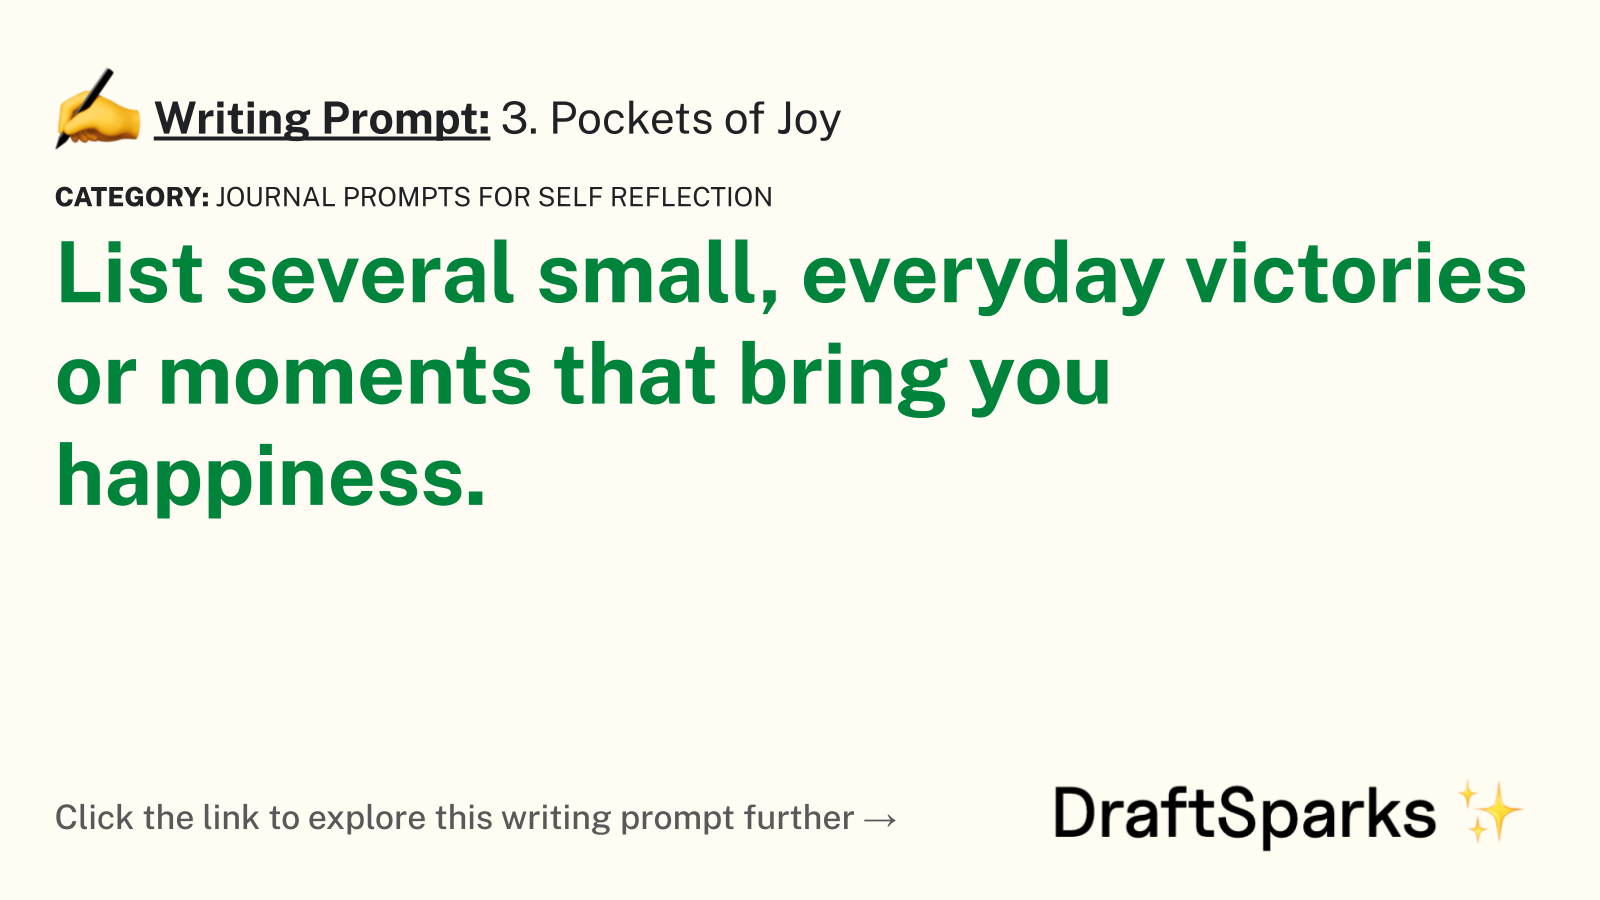 3. Pockets of Joy